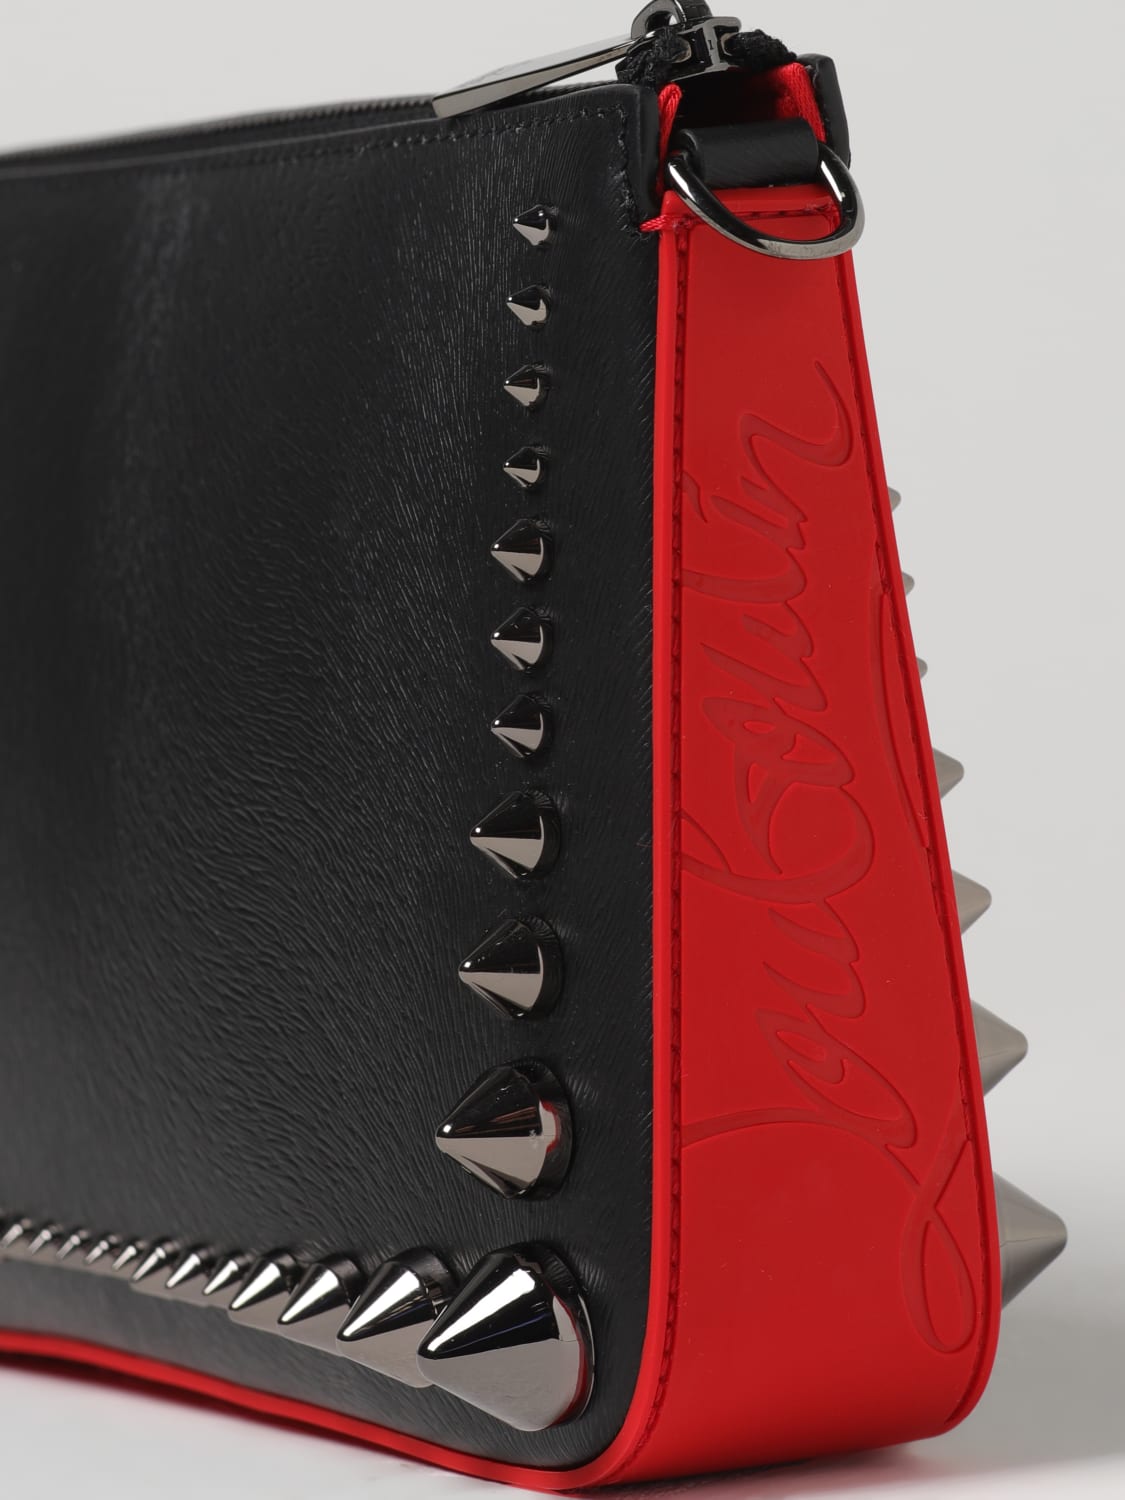 Loubila - Shoulder bag - Calf leather, rubber and spikes - Black